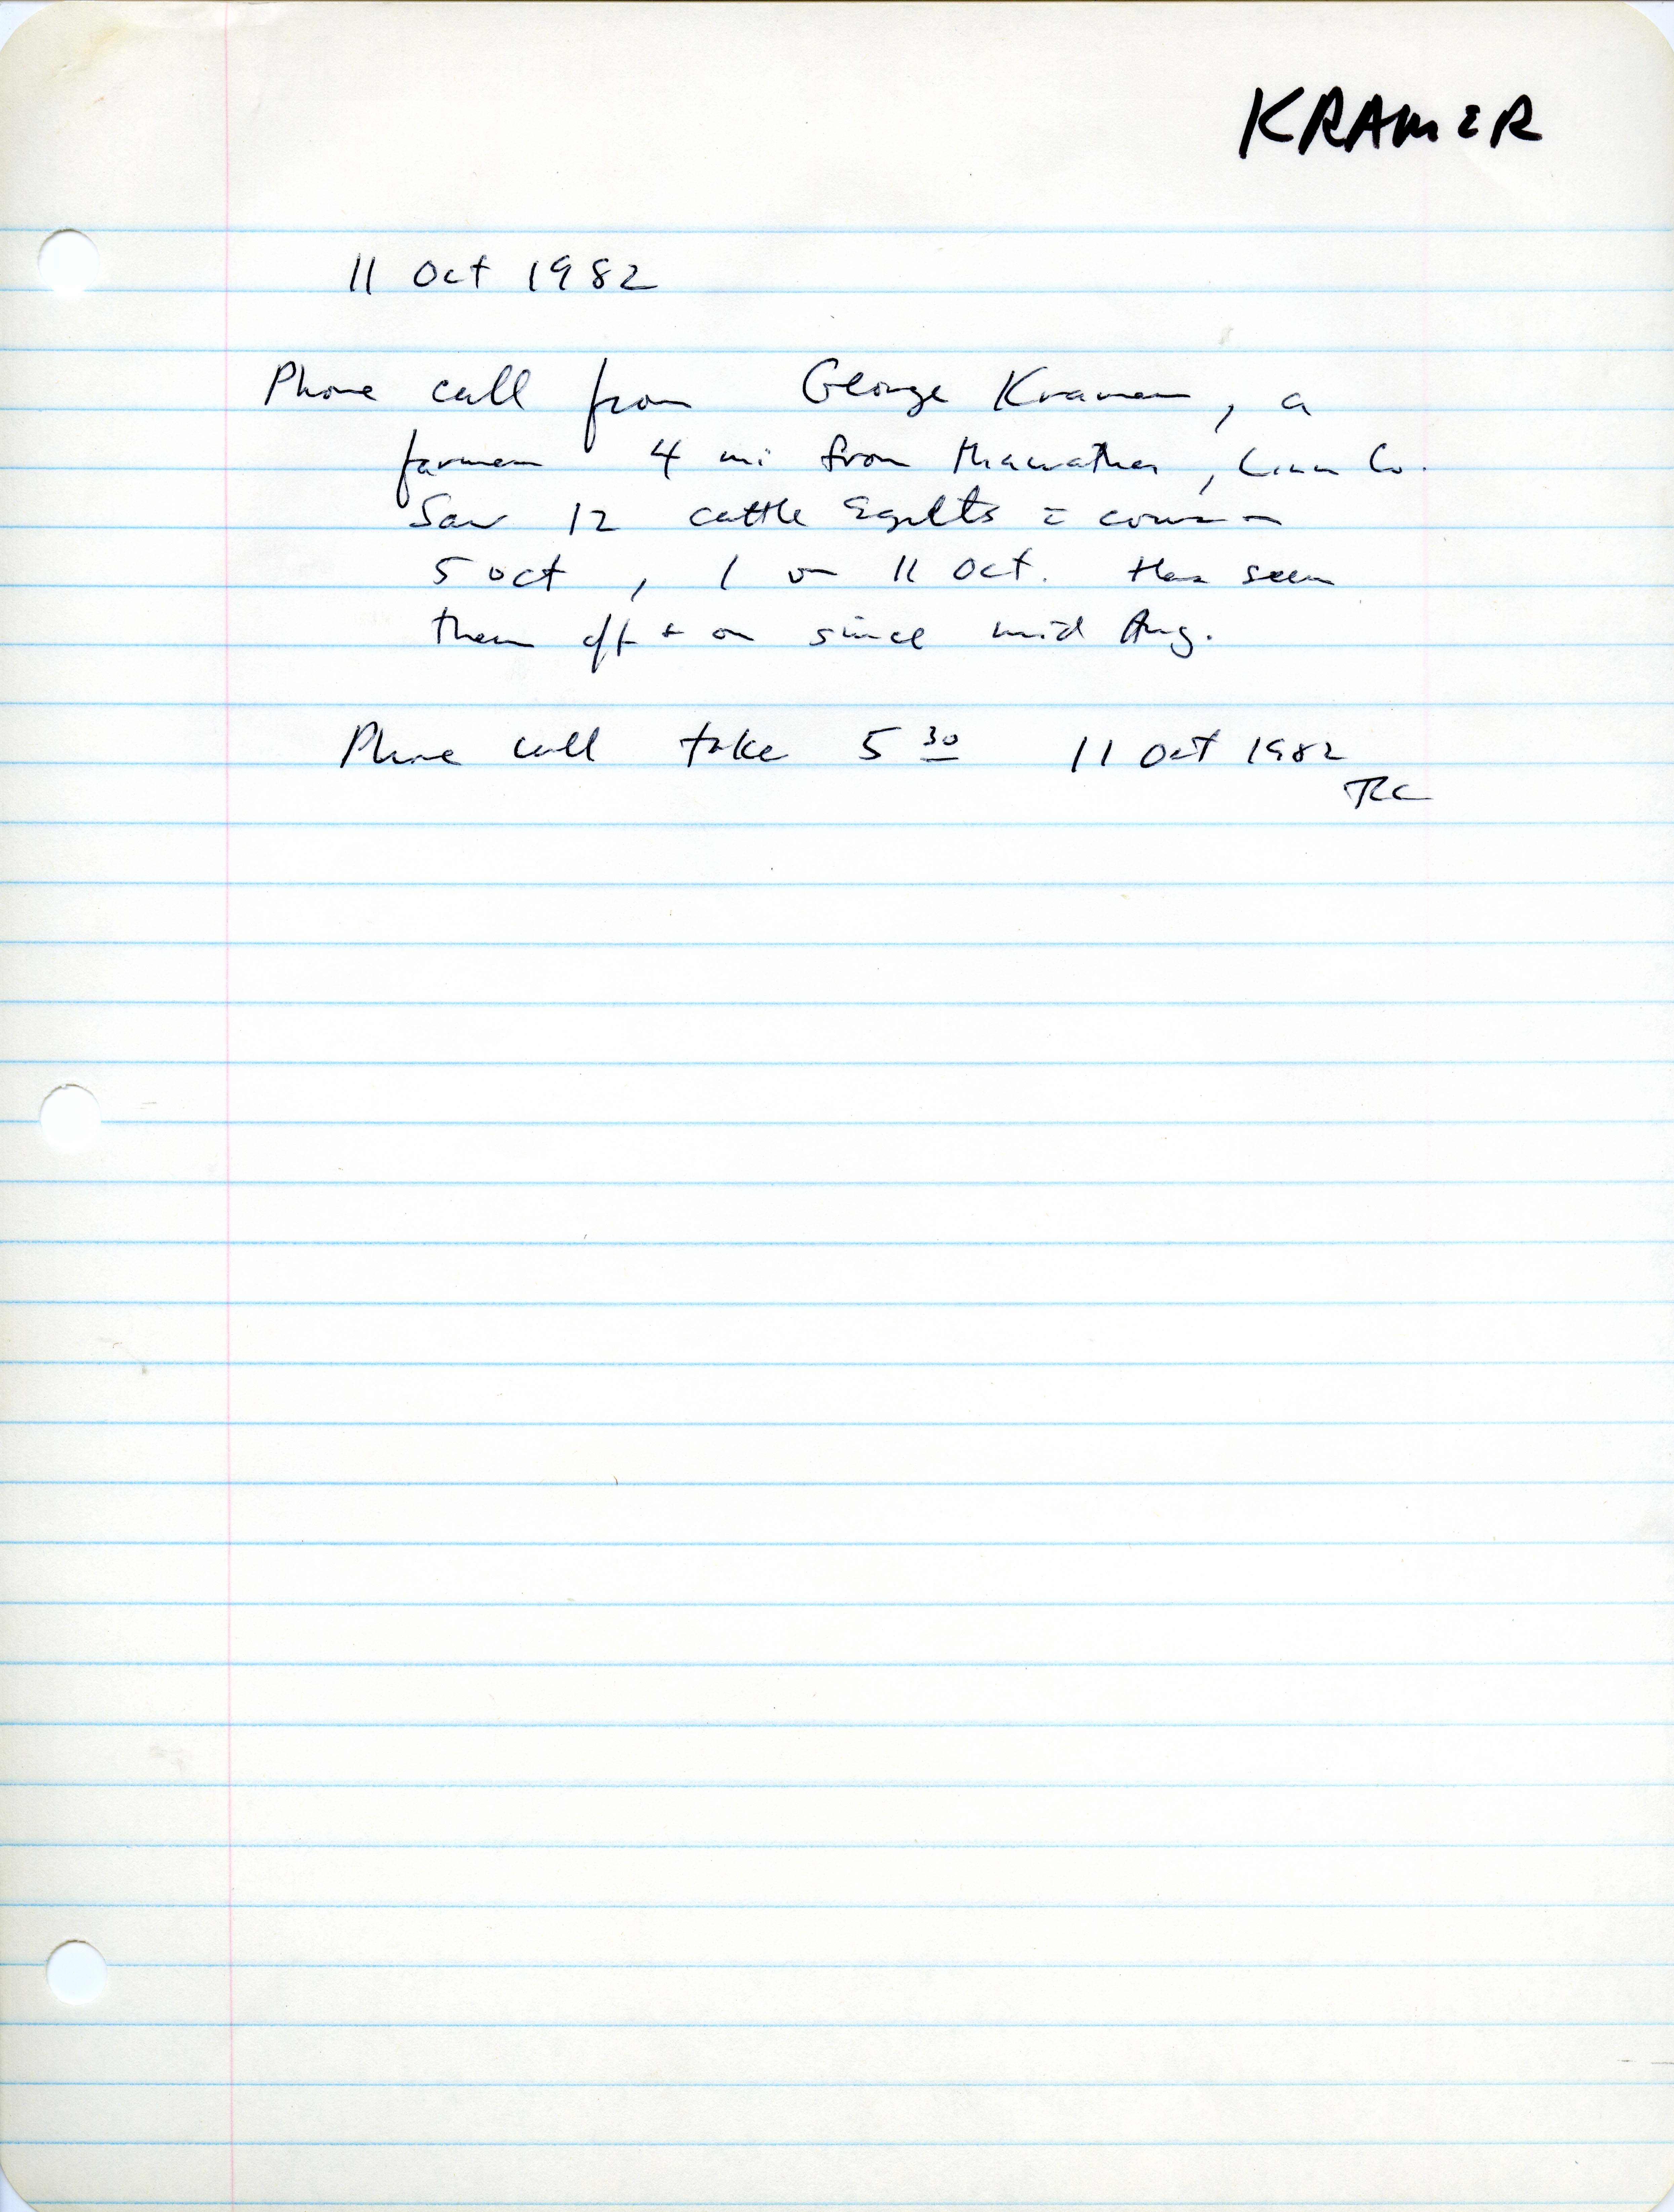 Field note from George Kramer regarding Cattle Egrets sighting, October 11, 1982